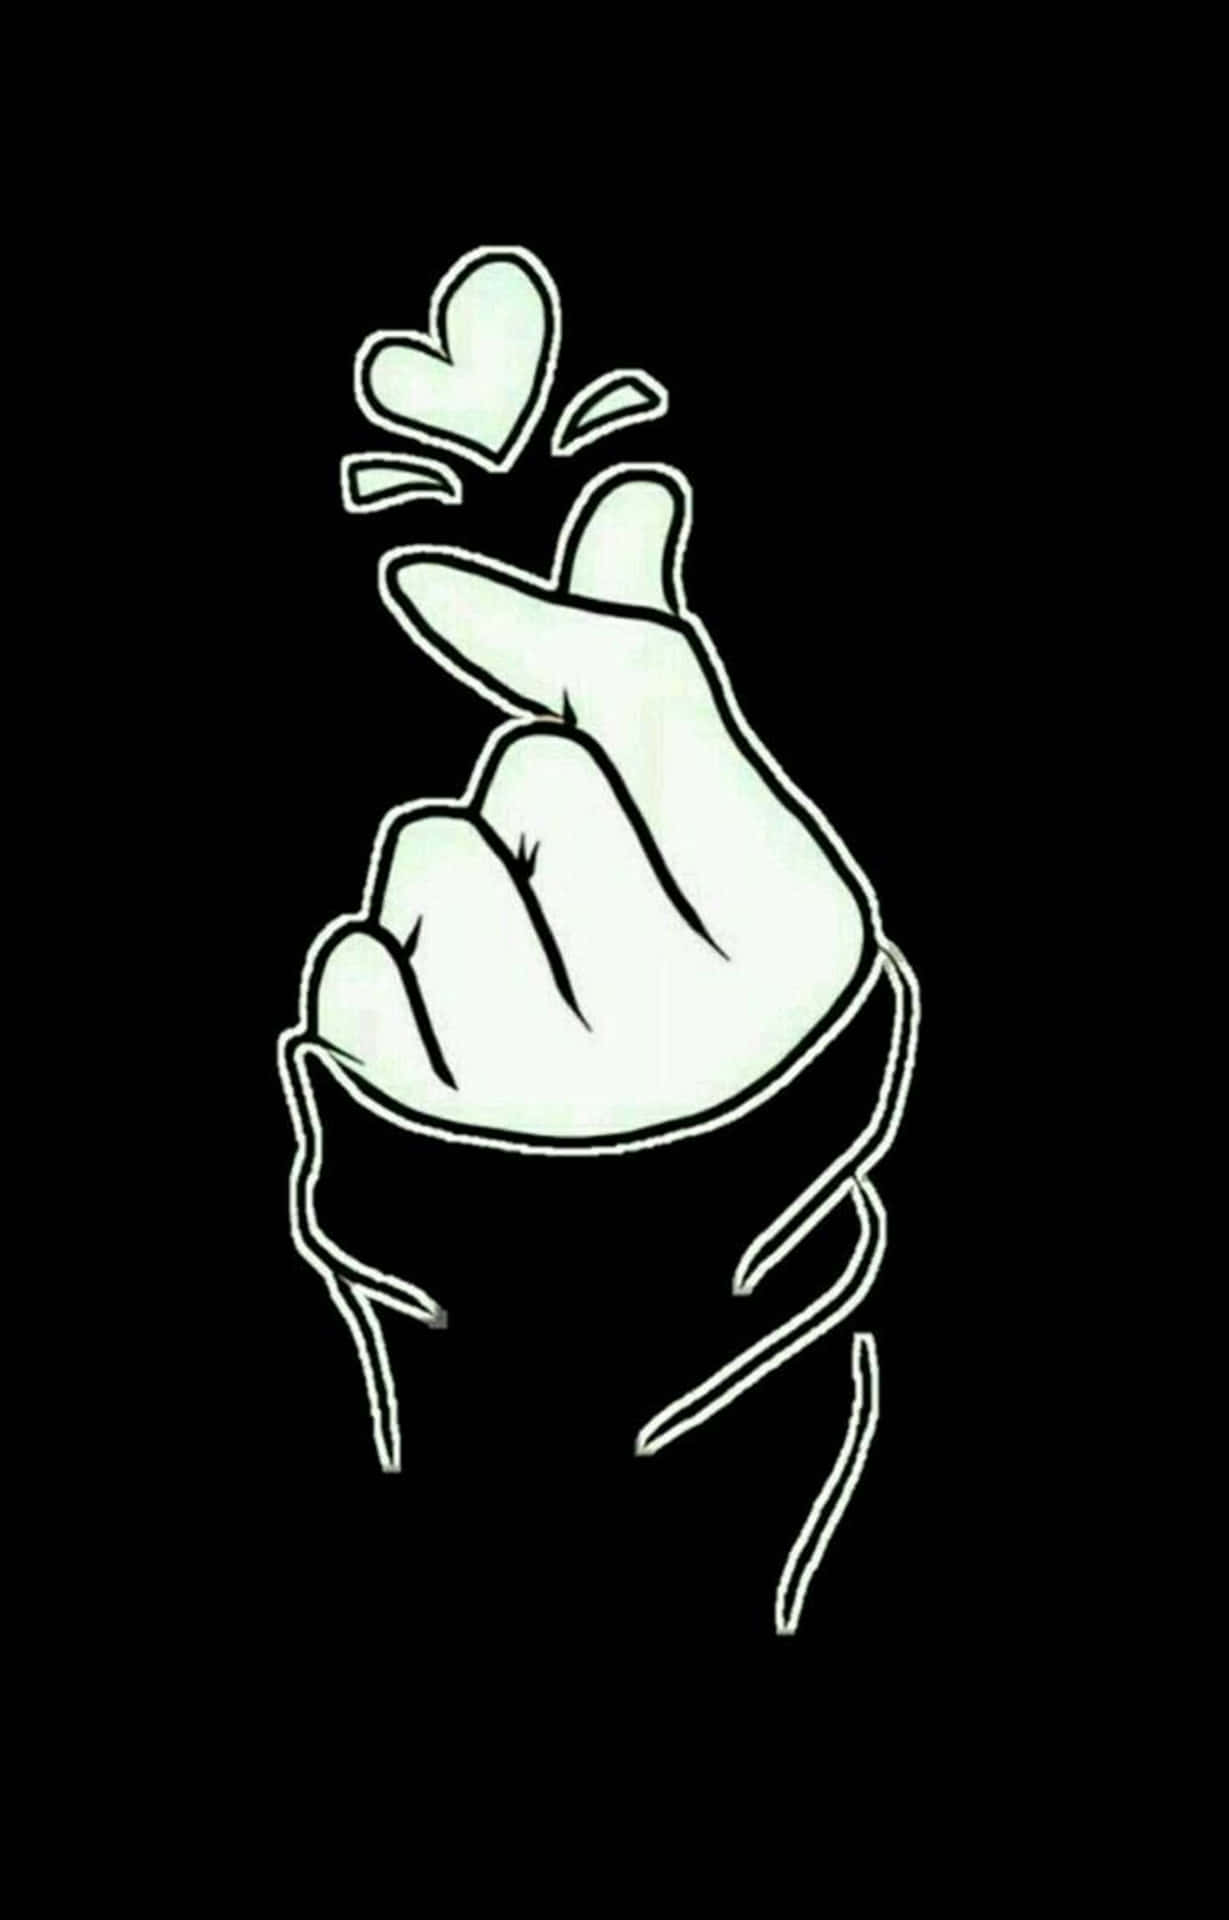 Bts Finger Heart Gesture: Showcasing The K-pop Love Symbol